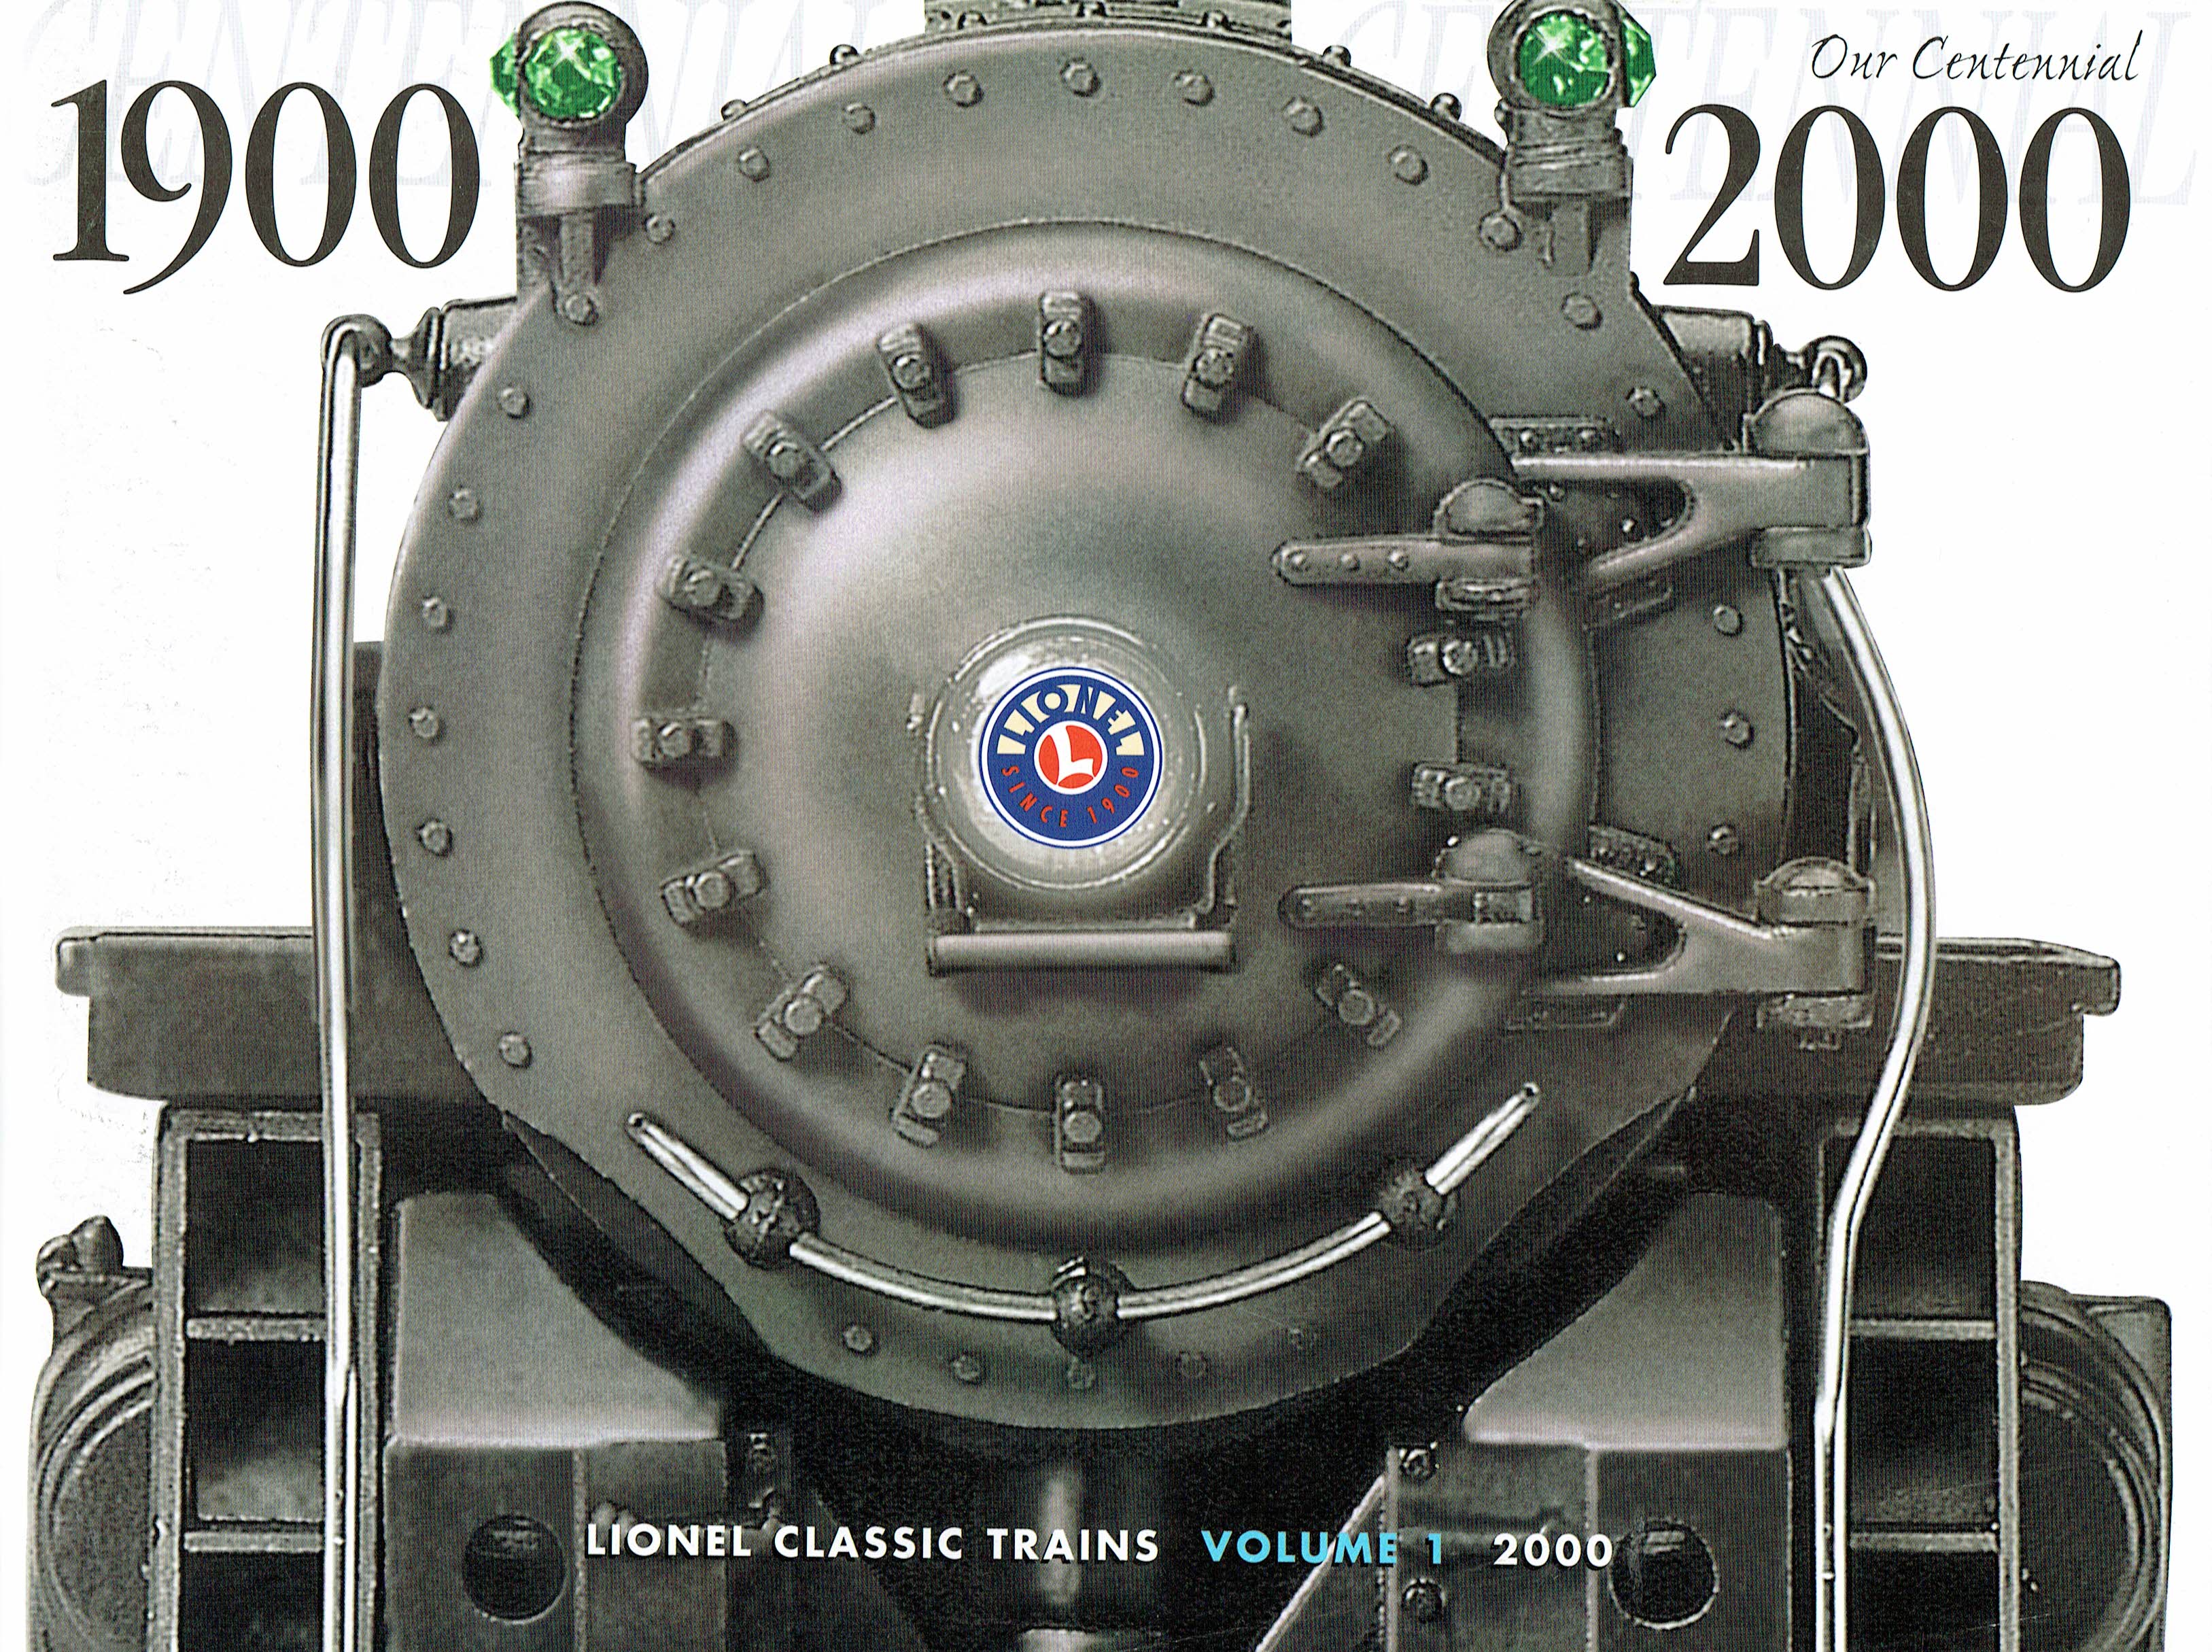 Lionel 2000 Classic Trains Volume 1 "Our Centennial" Catalog image